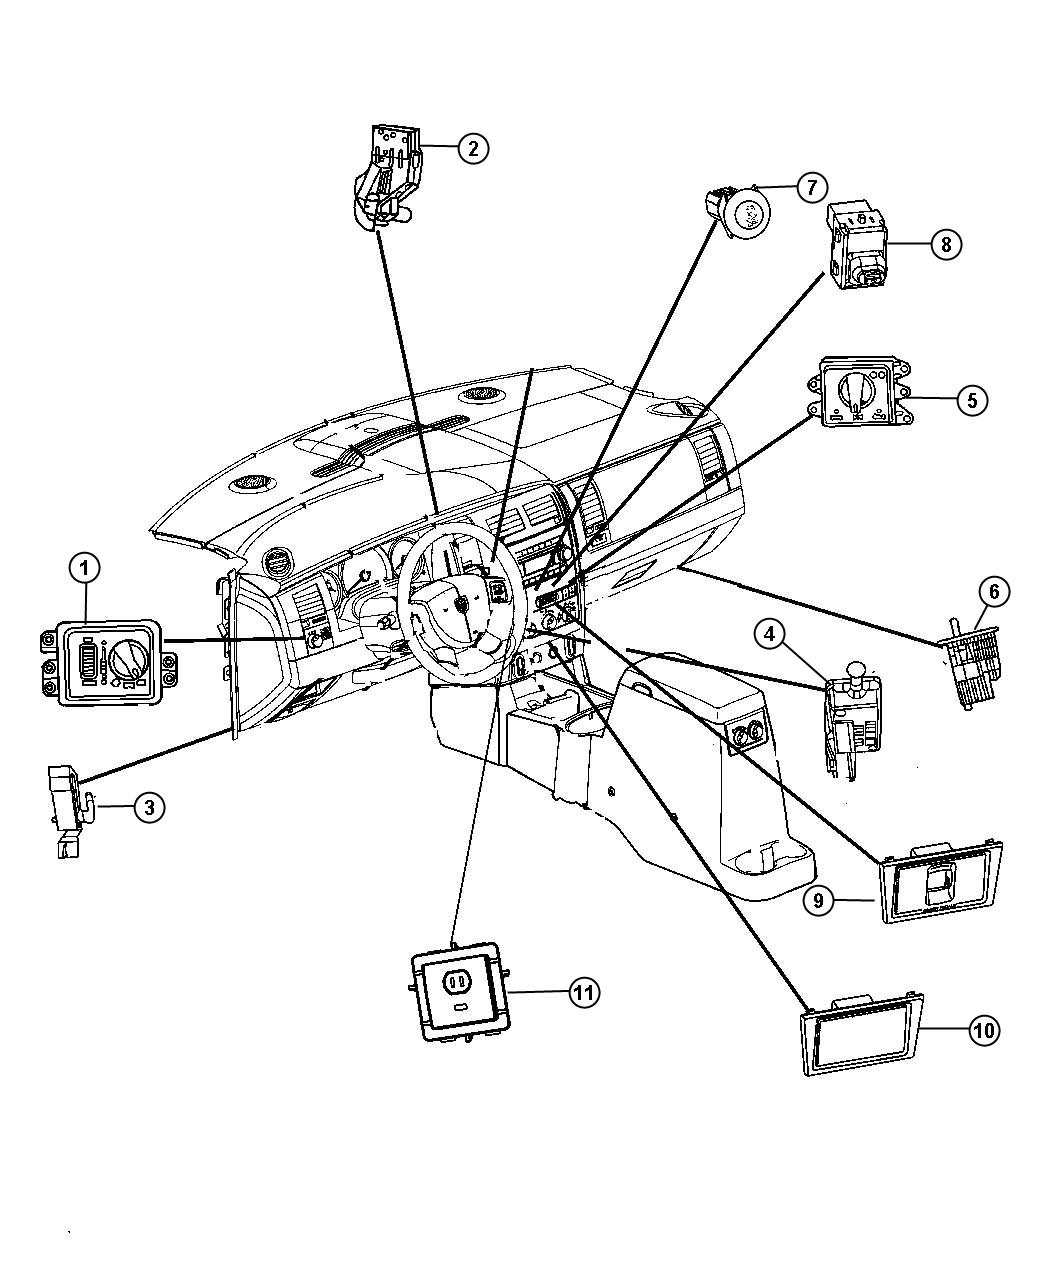 chrysler part number mr193970 wiring diagram